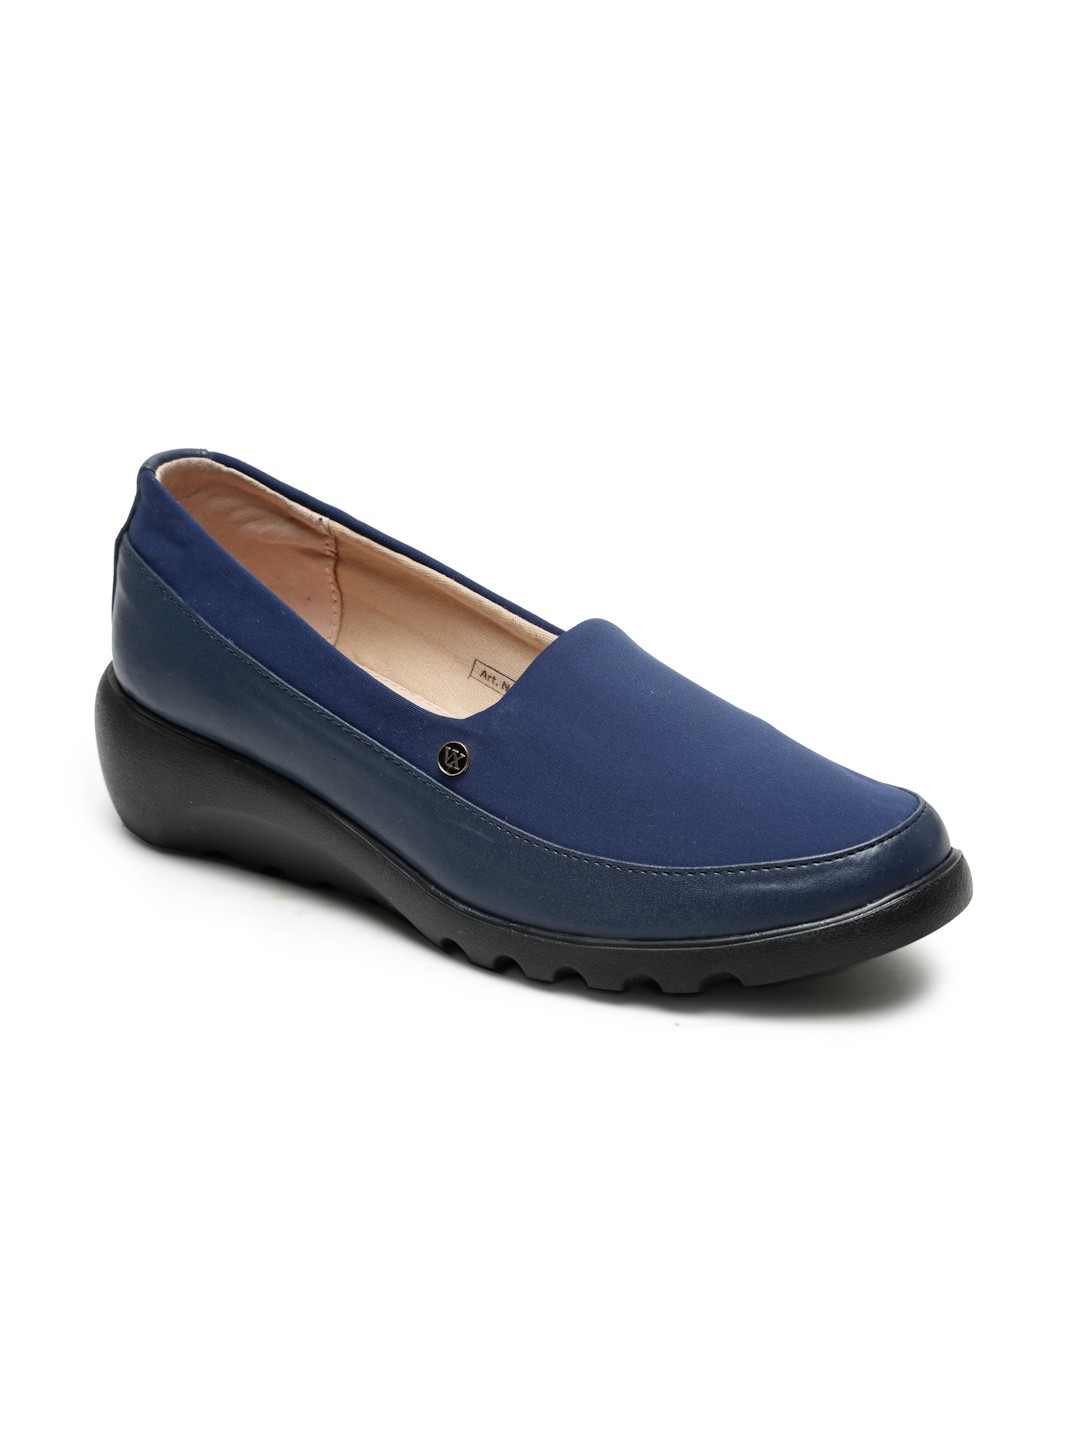 Buy Von Wellx Germany Comfort Women's Blue Casual Shoes Elsa Online in Qatar